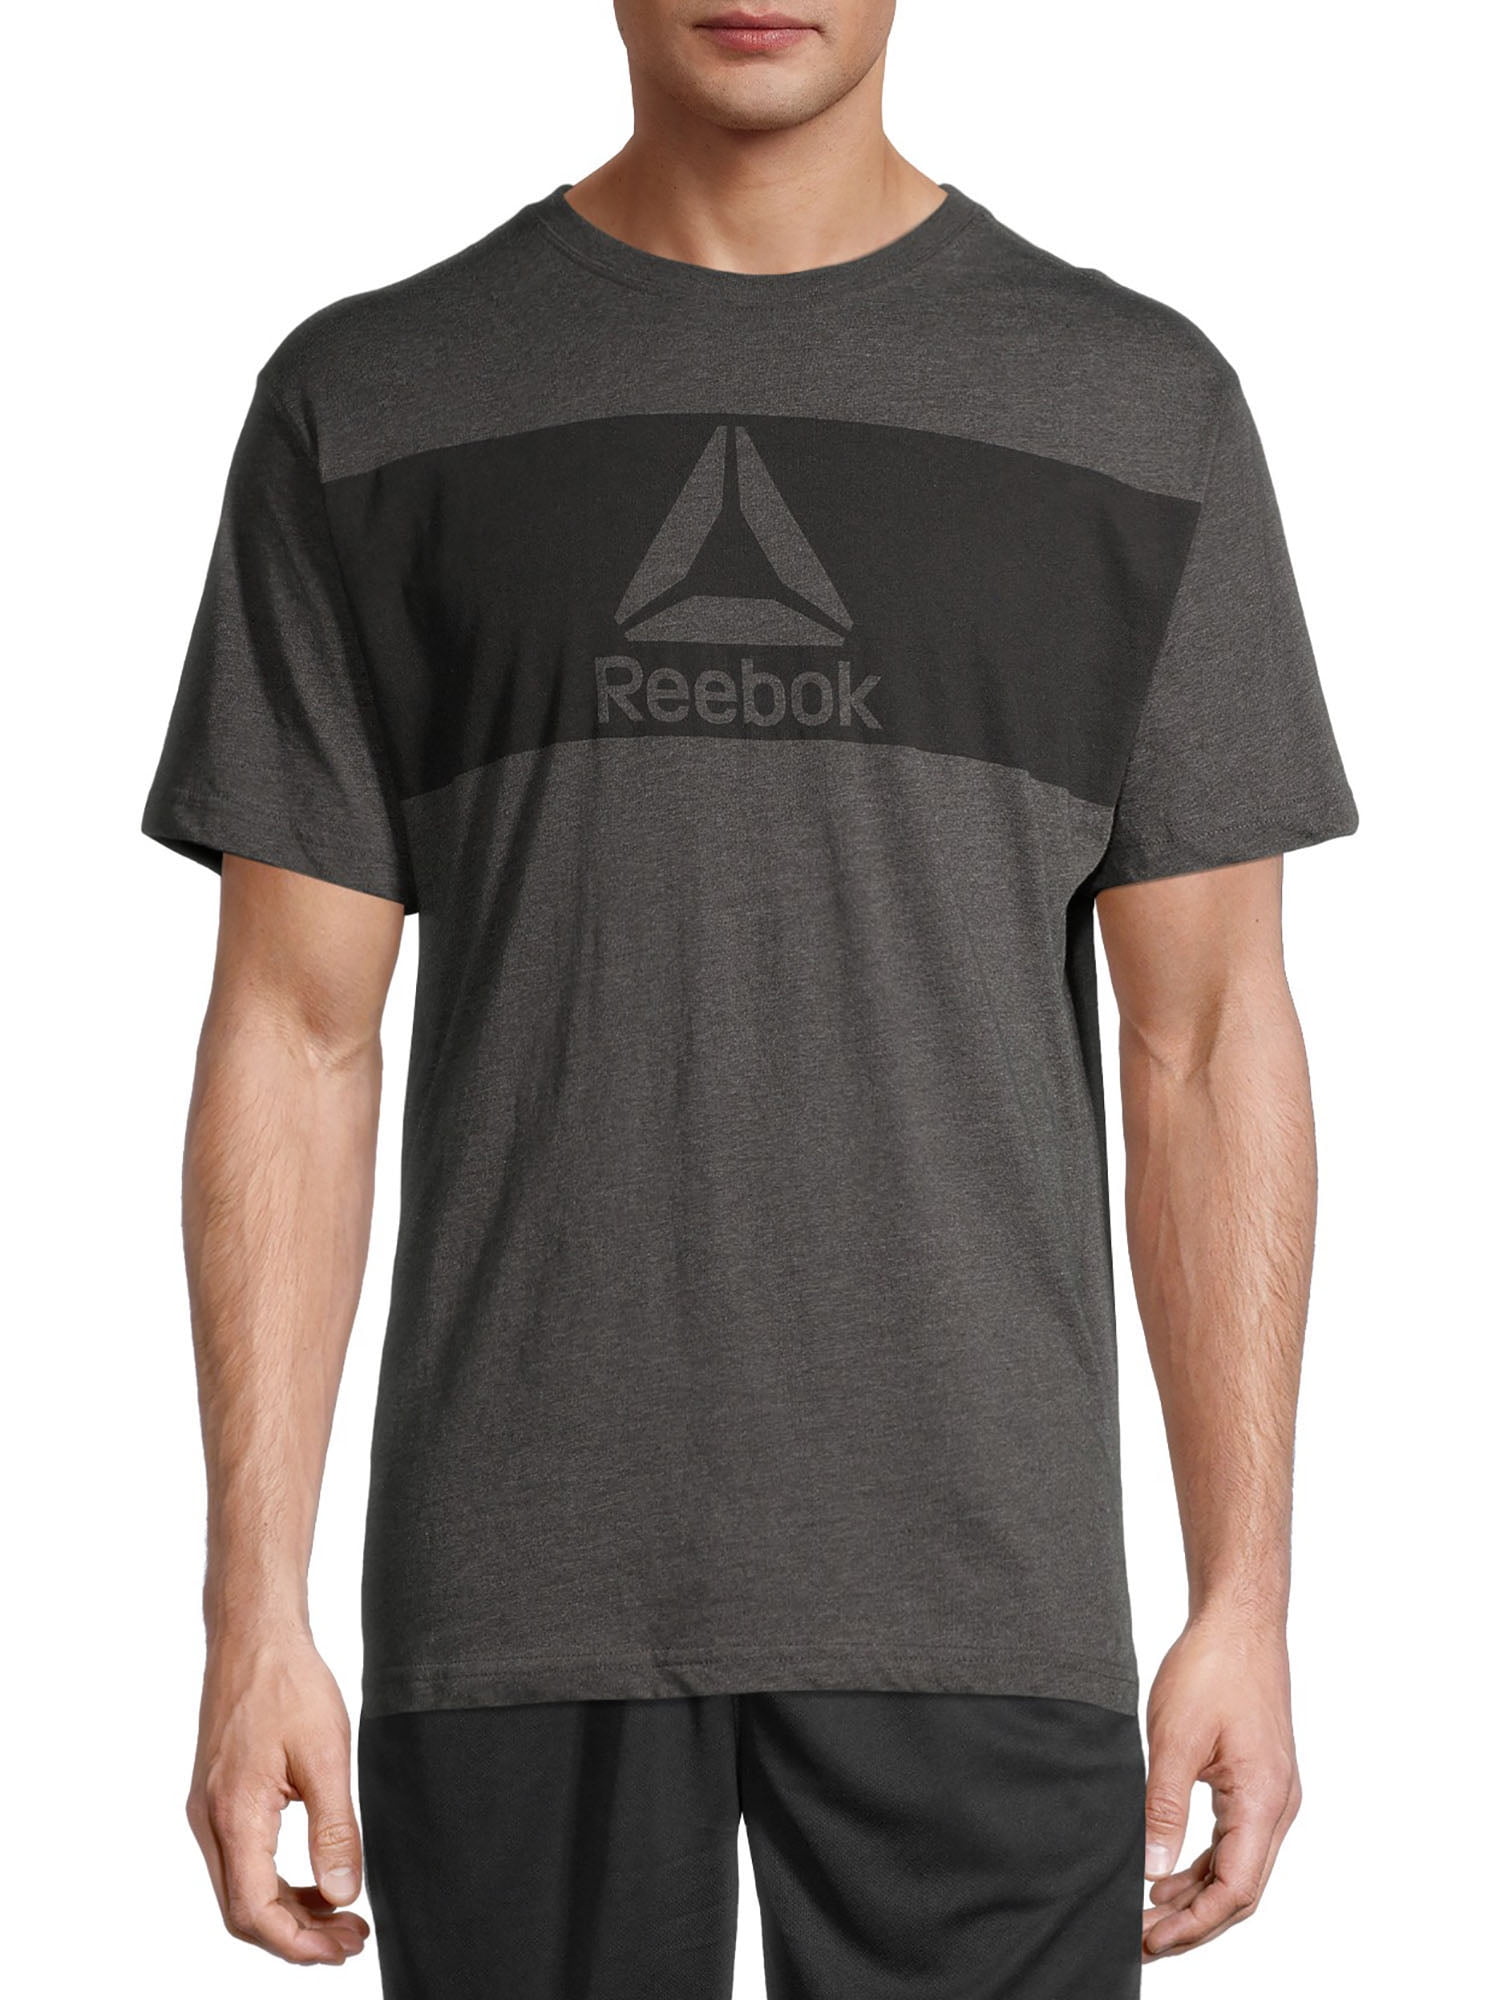 Reebok Men's Colorblocked T-Shirt - Walmart.com